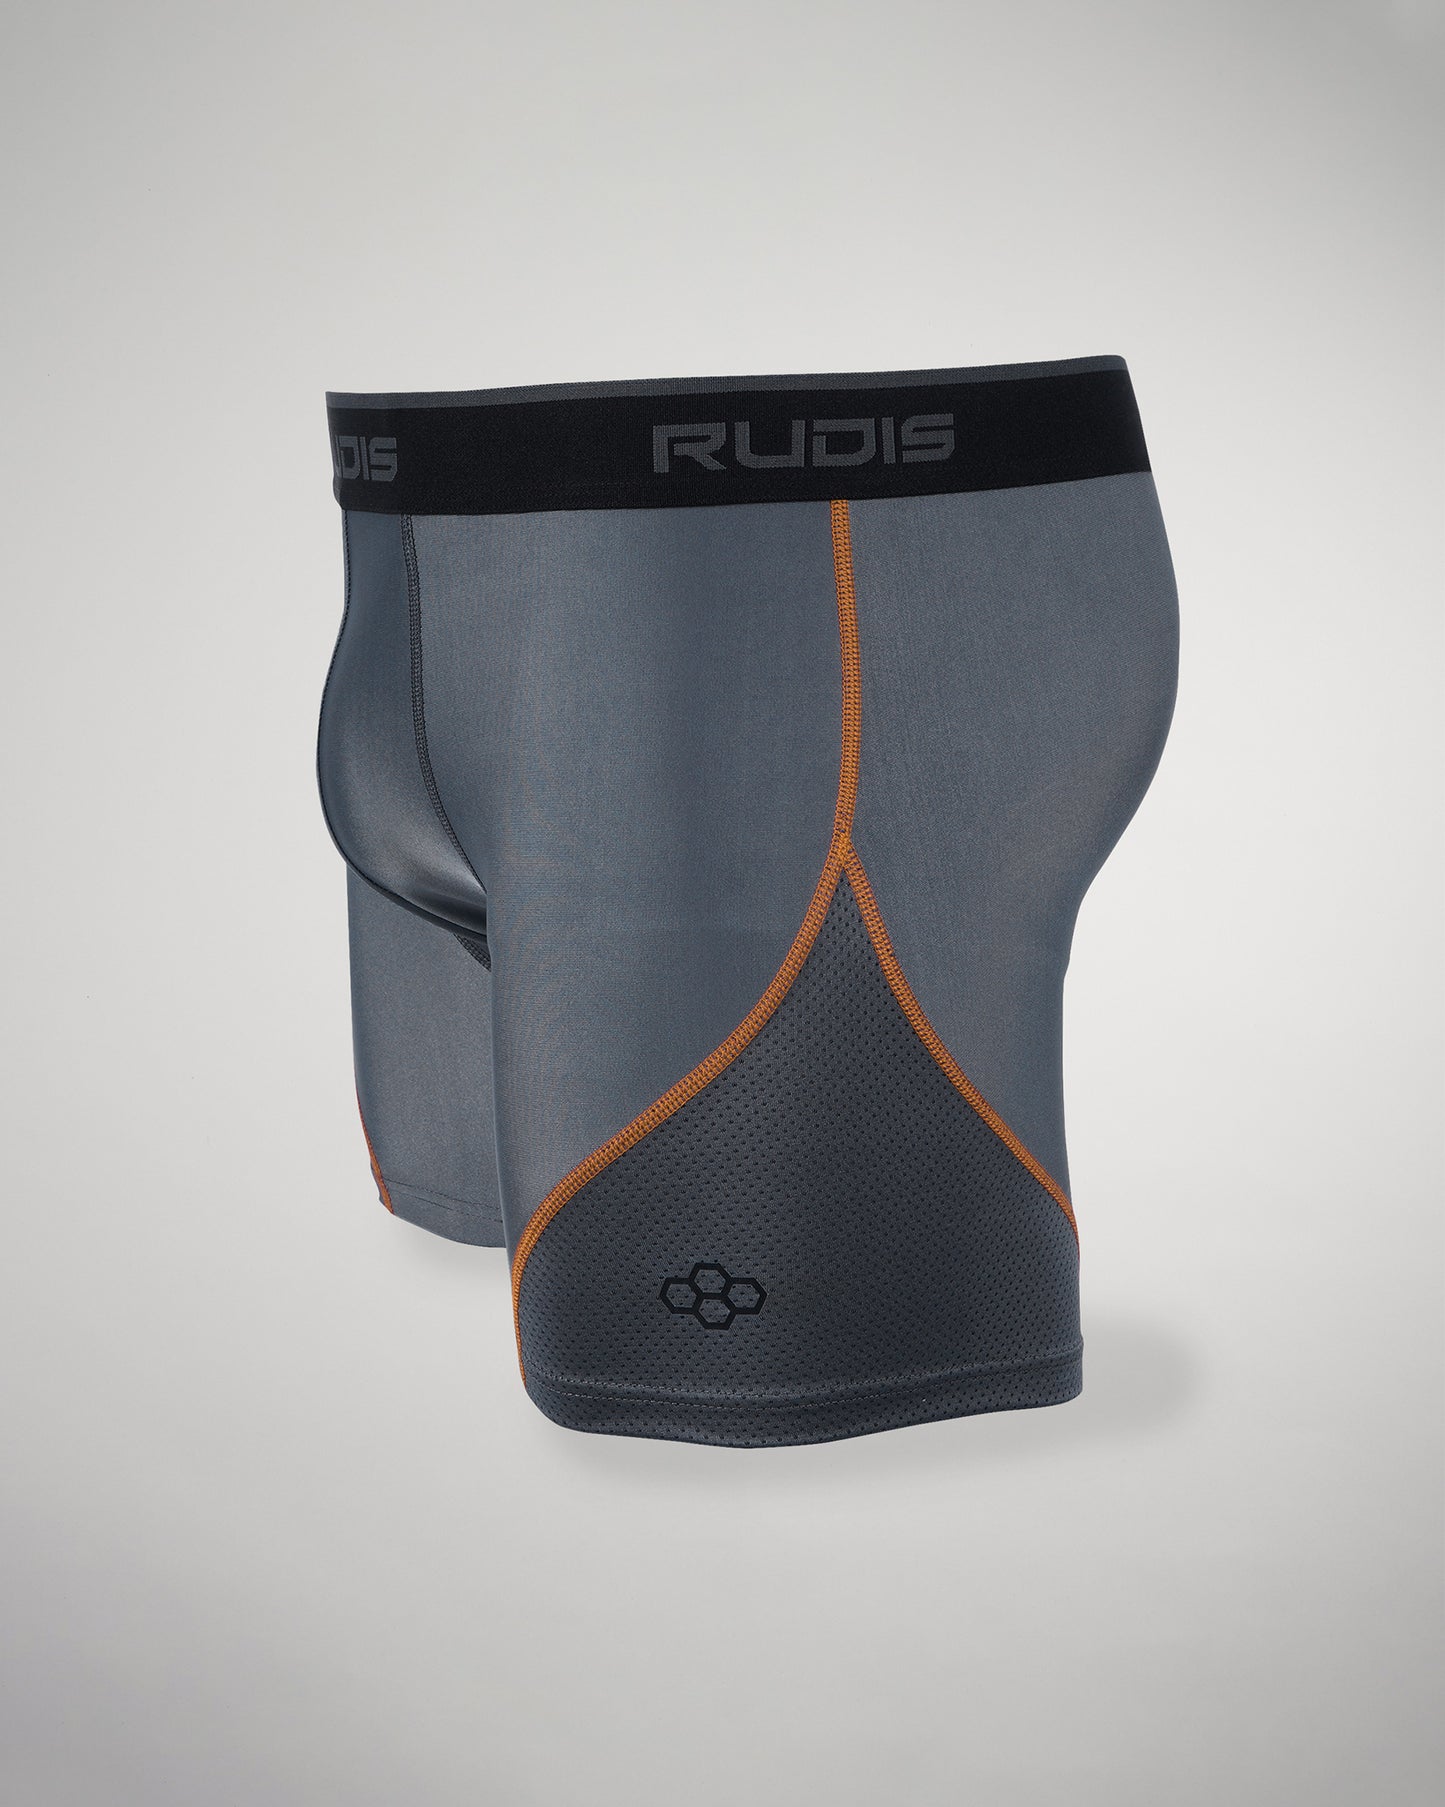 RUDIS Essential Gray/Orange Youth Boxer Brief